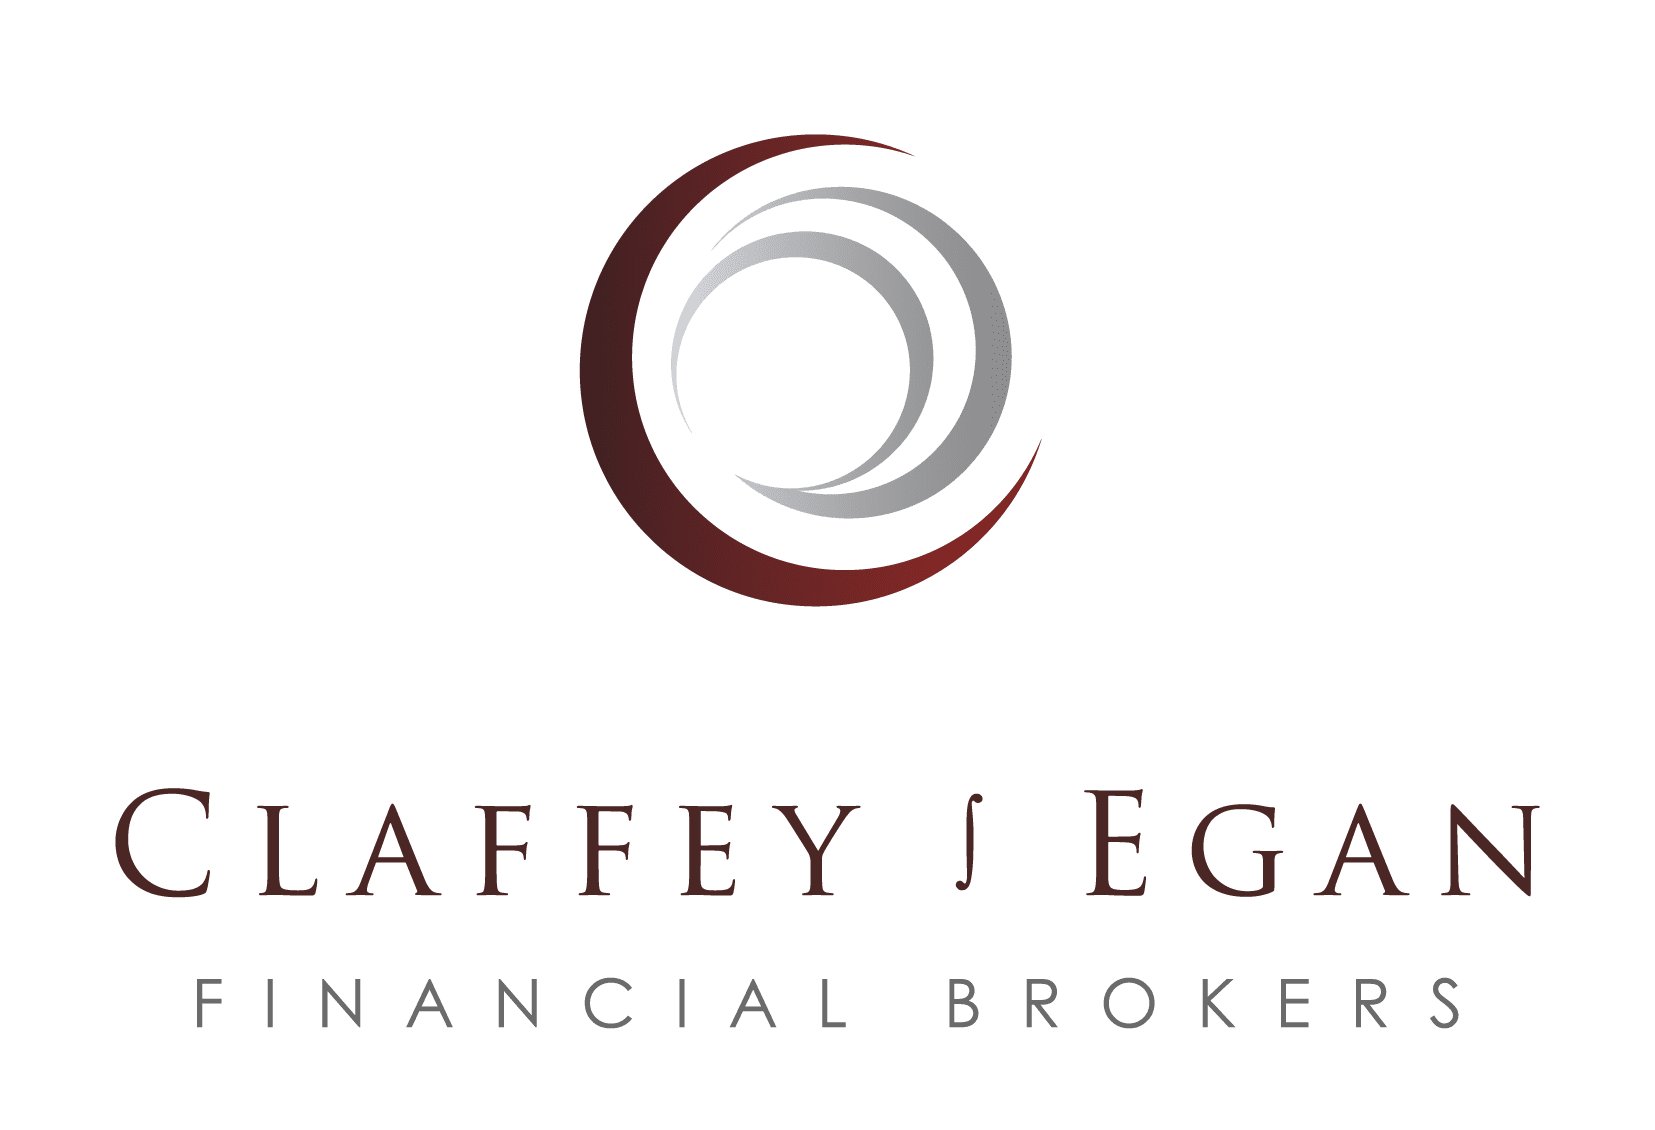 Claffey and Egan Financial Brokers